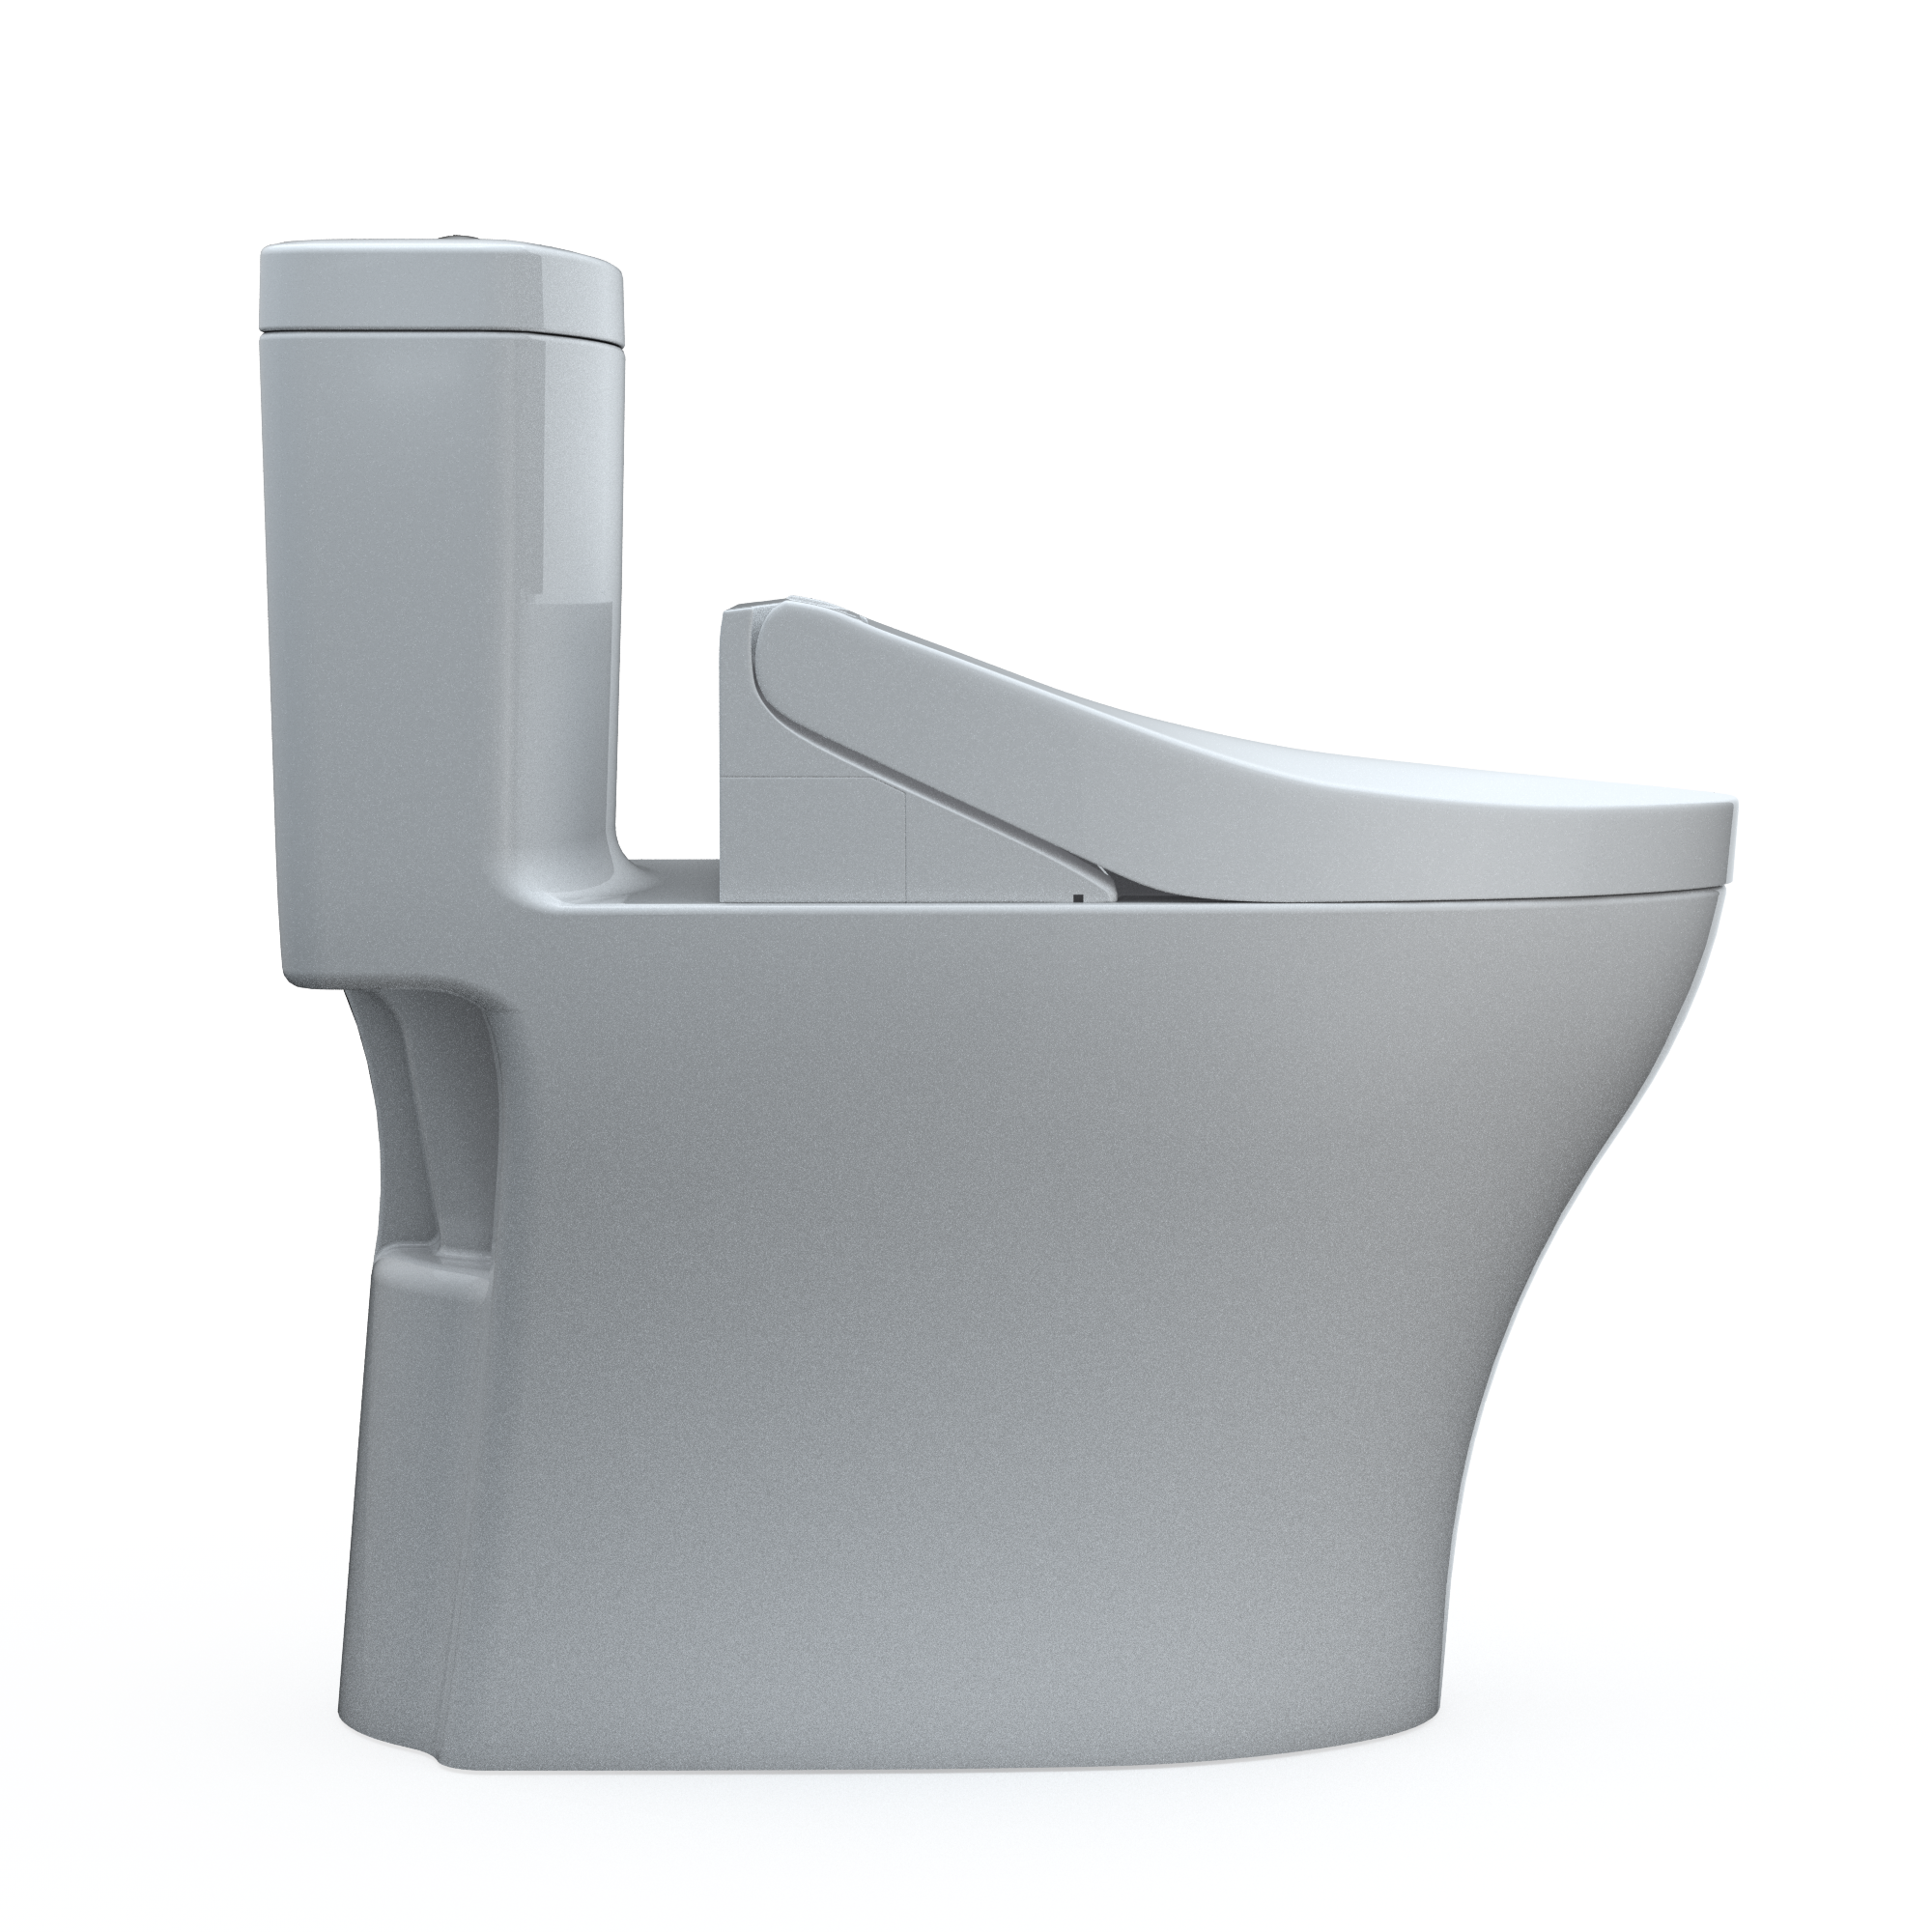 TOTO Washlet+ Cotton White Dual Flush Elongated Standard Height